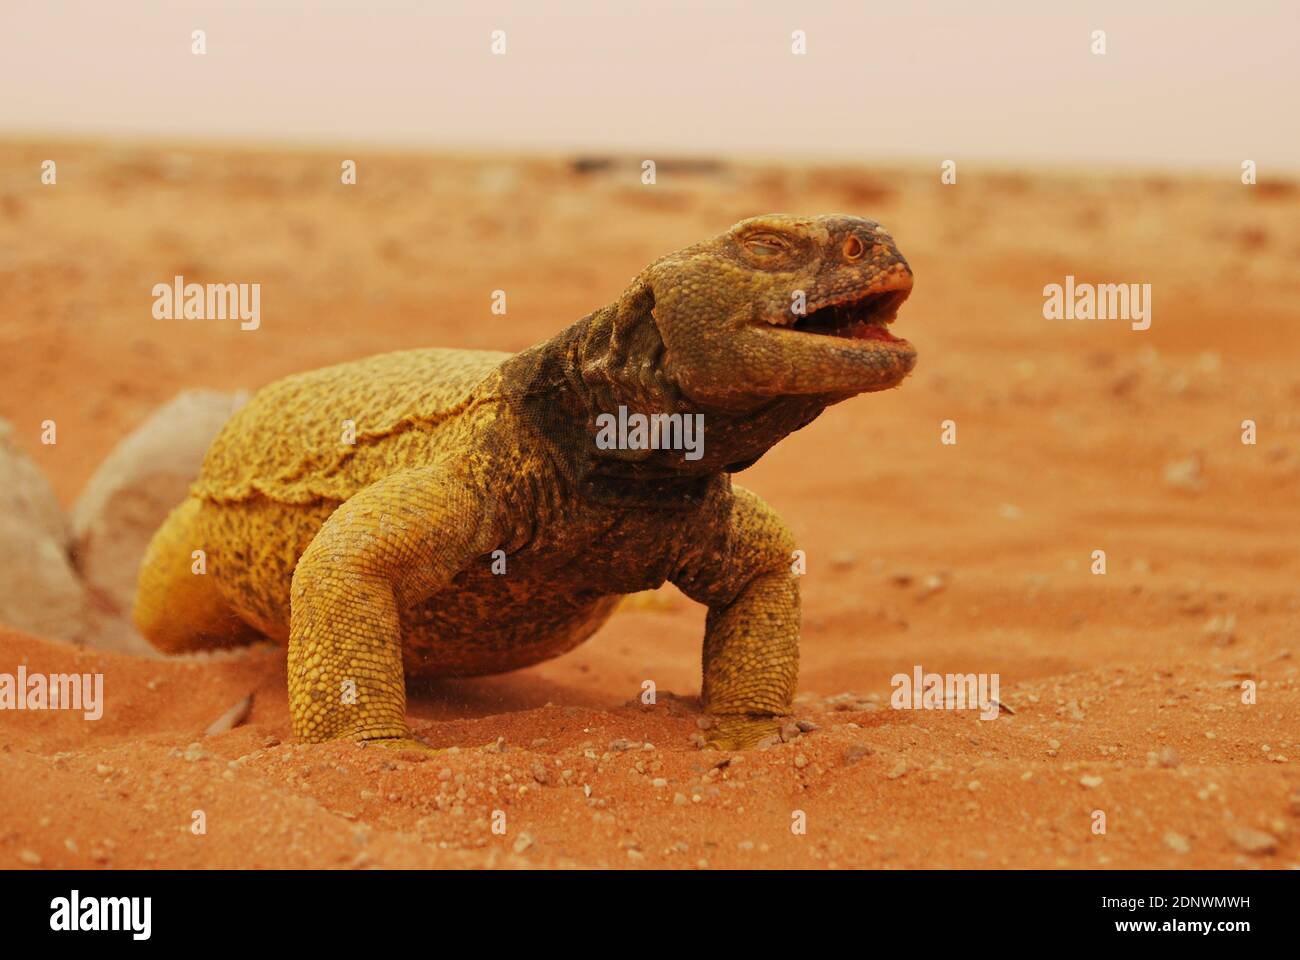 Saudi Arabian desert Iguana Stock Photo